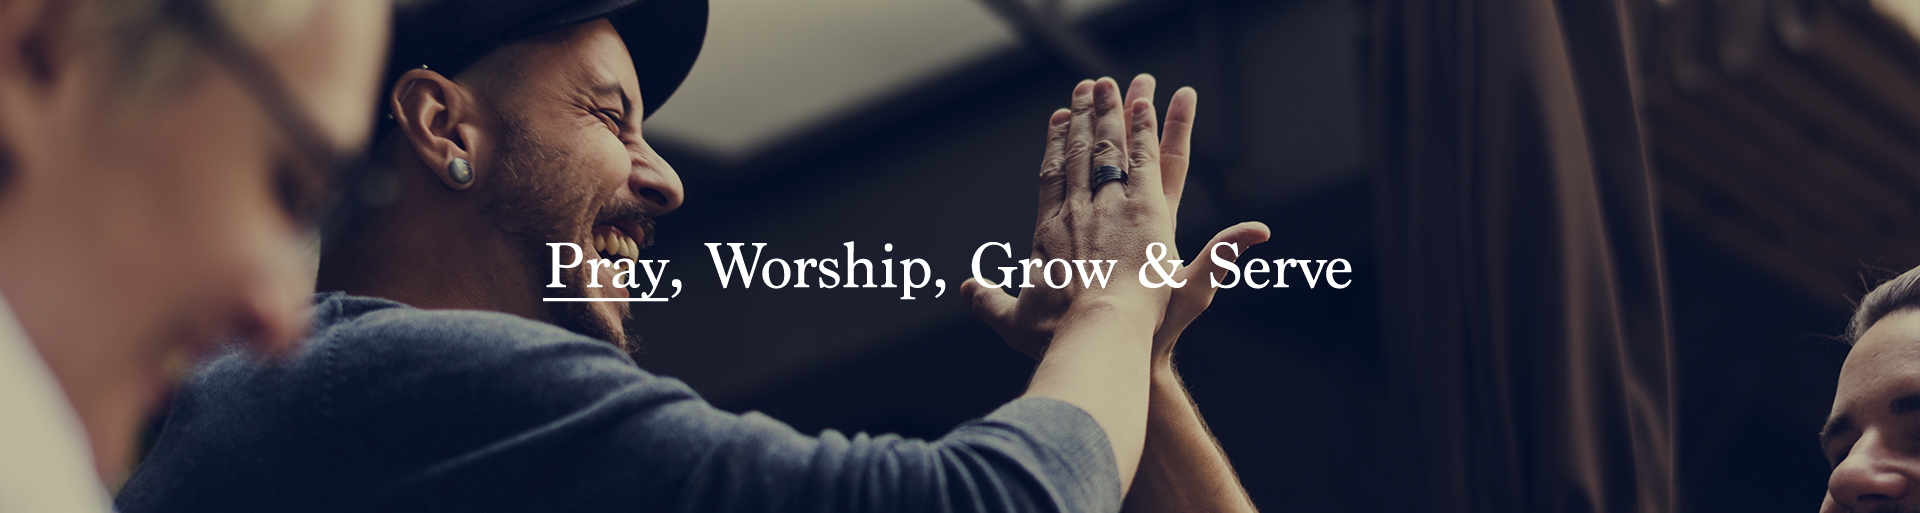 Pray, Worship, Grow & Serve